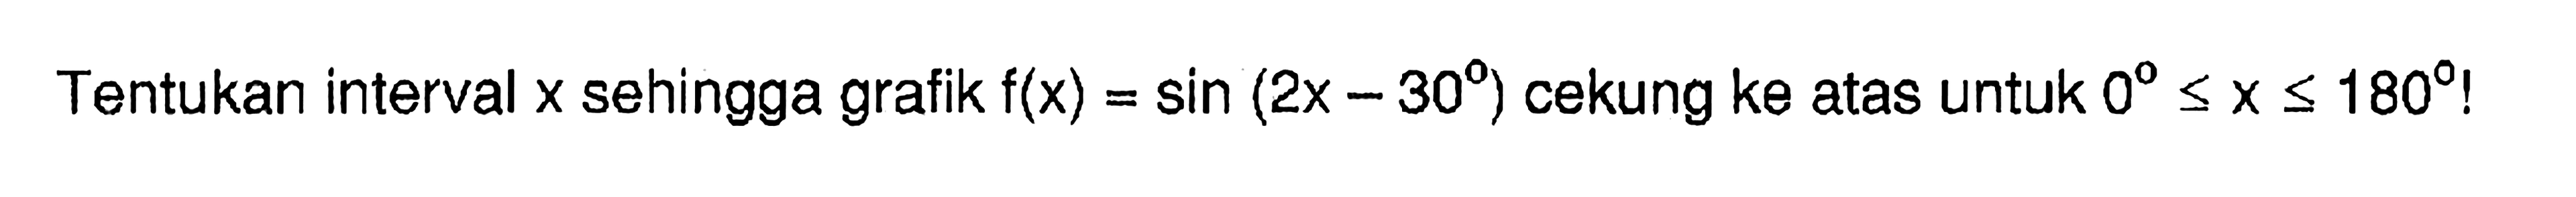 Tentukan interval x sehingga grafik f(x)=sin (2x -30) cekung ke atas untuk 0<X<180!